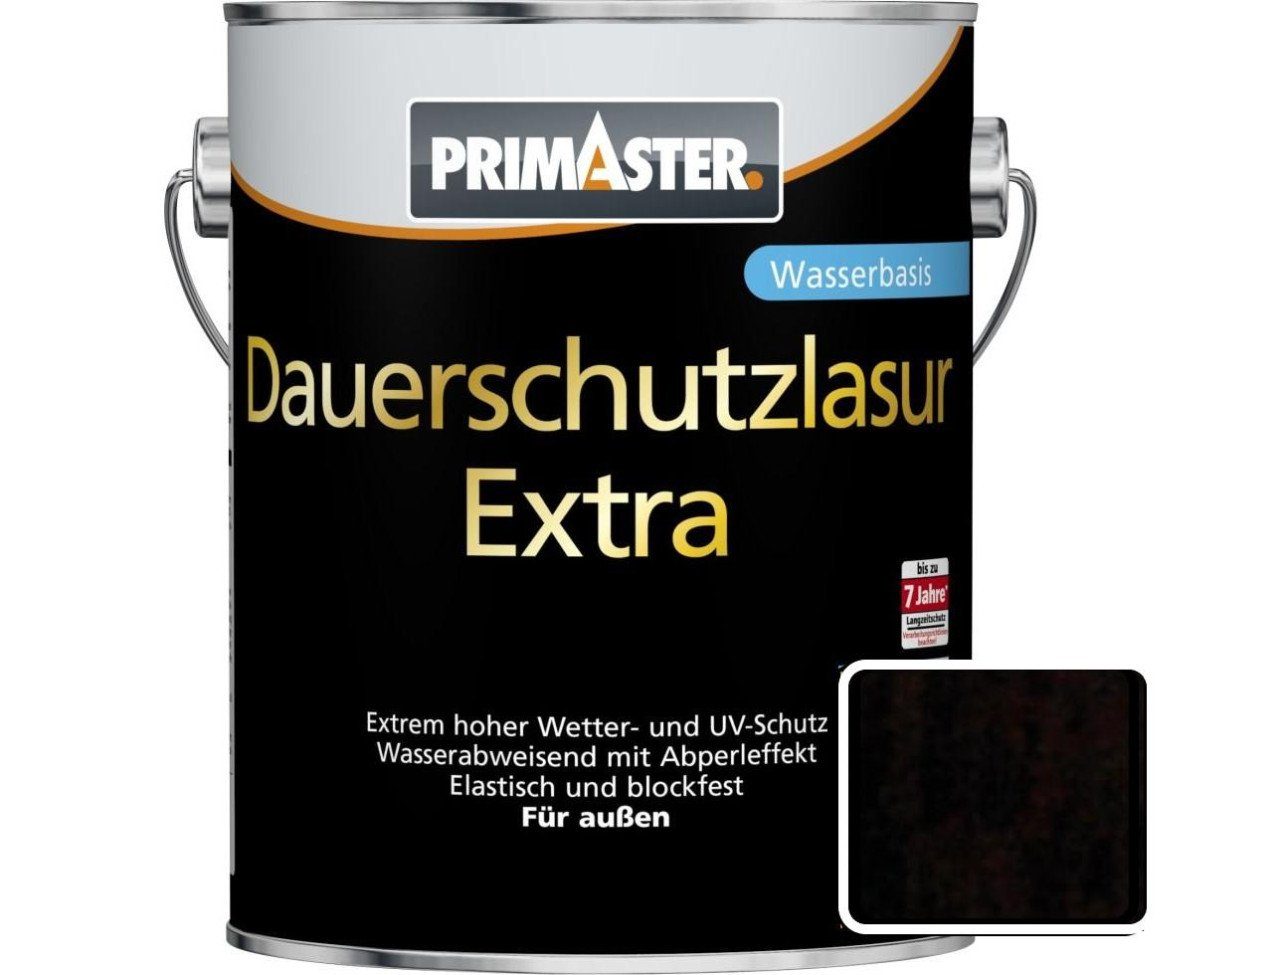 Primaster Lasur Dauerschutzlasur L Primaster Extra palisander 5